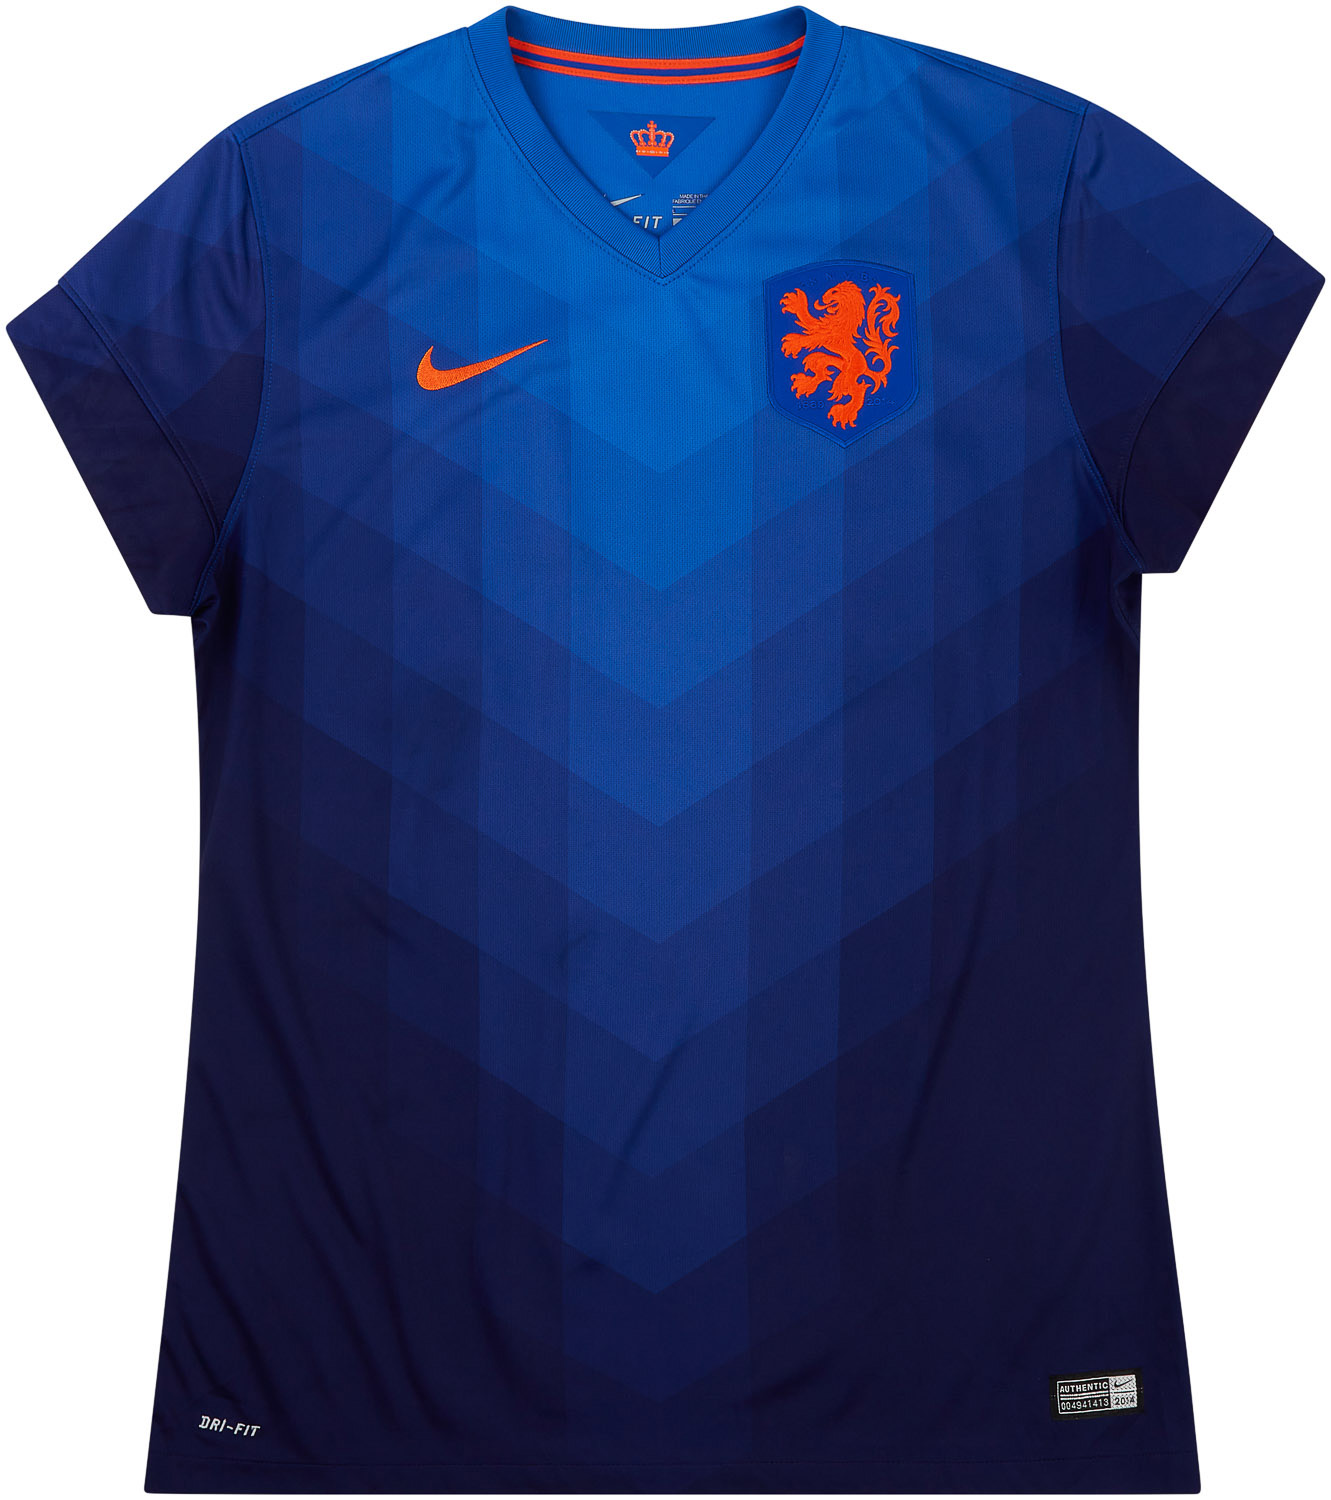 Retro Netherlands Shirt